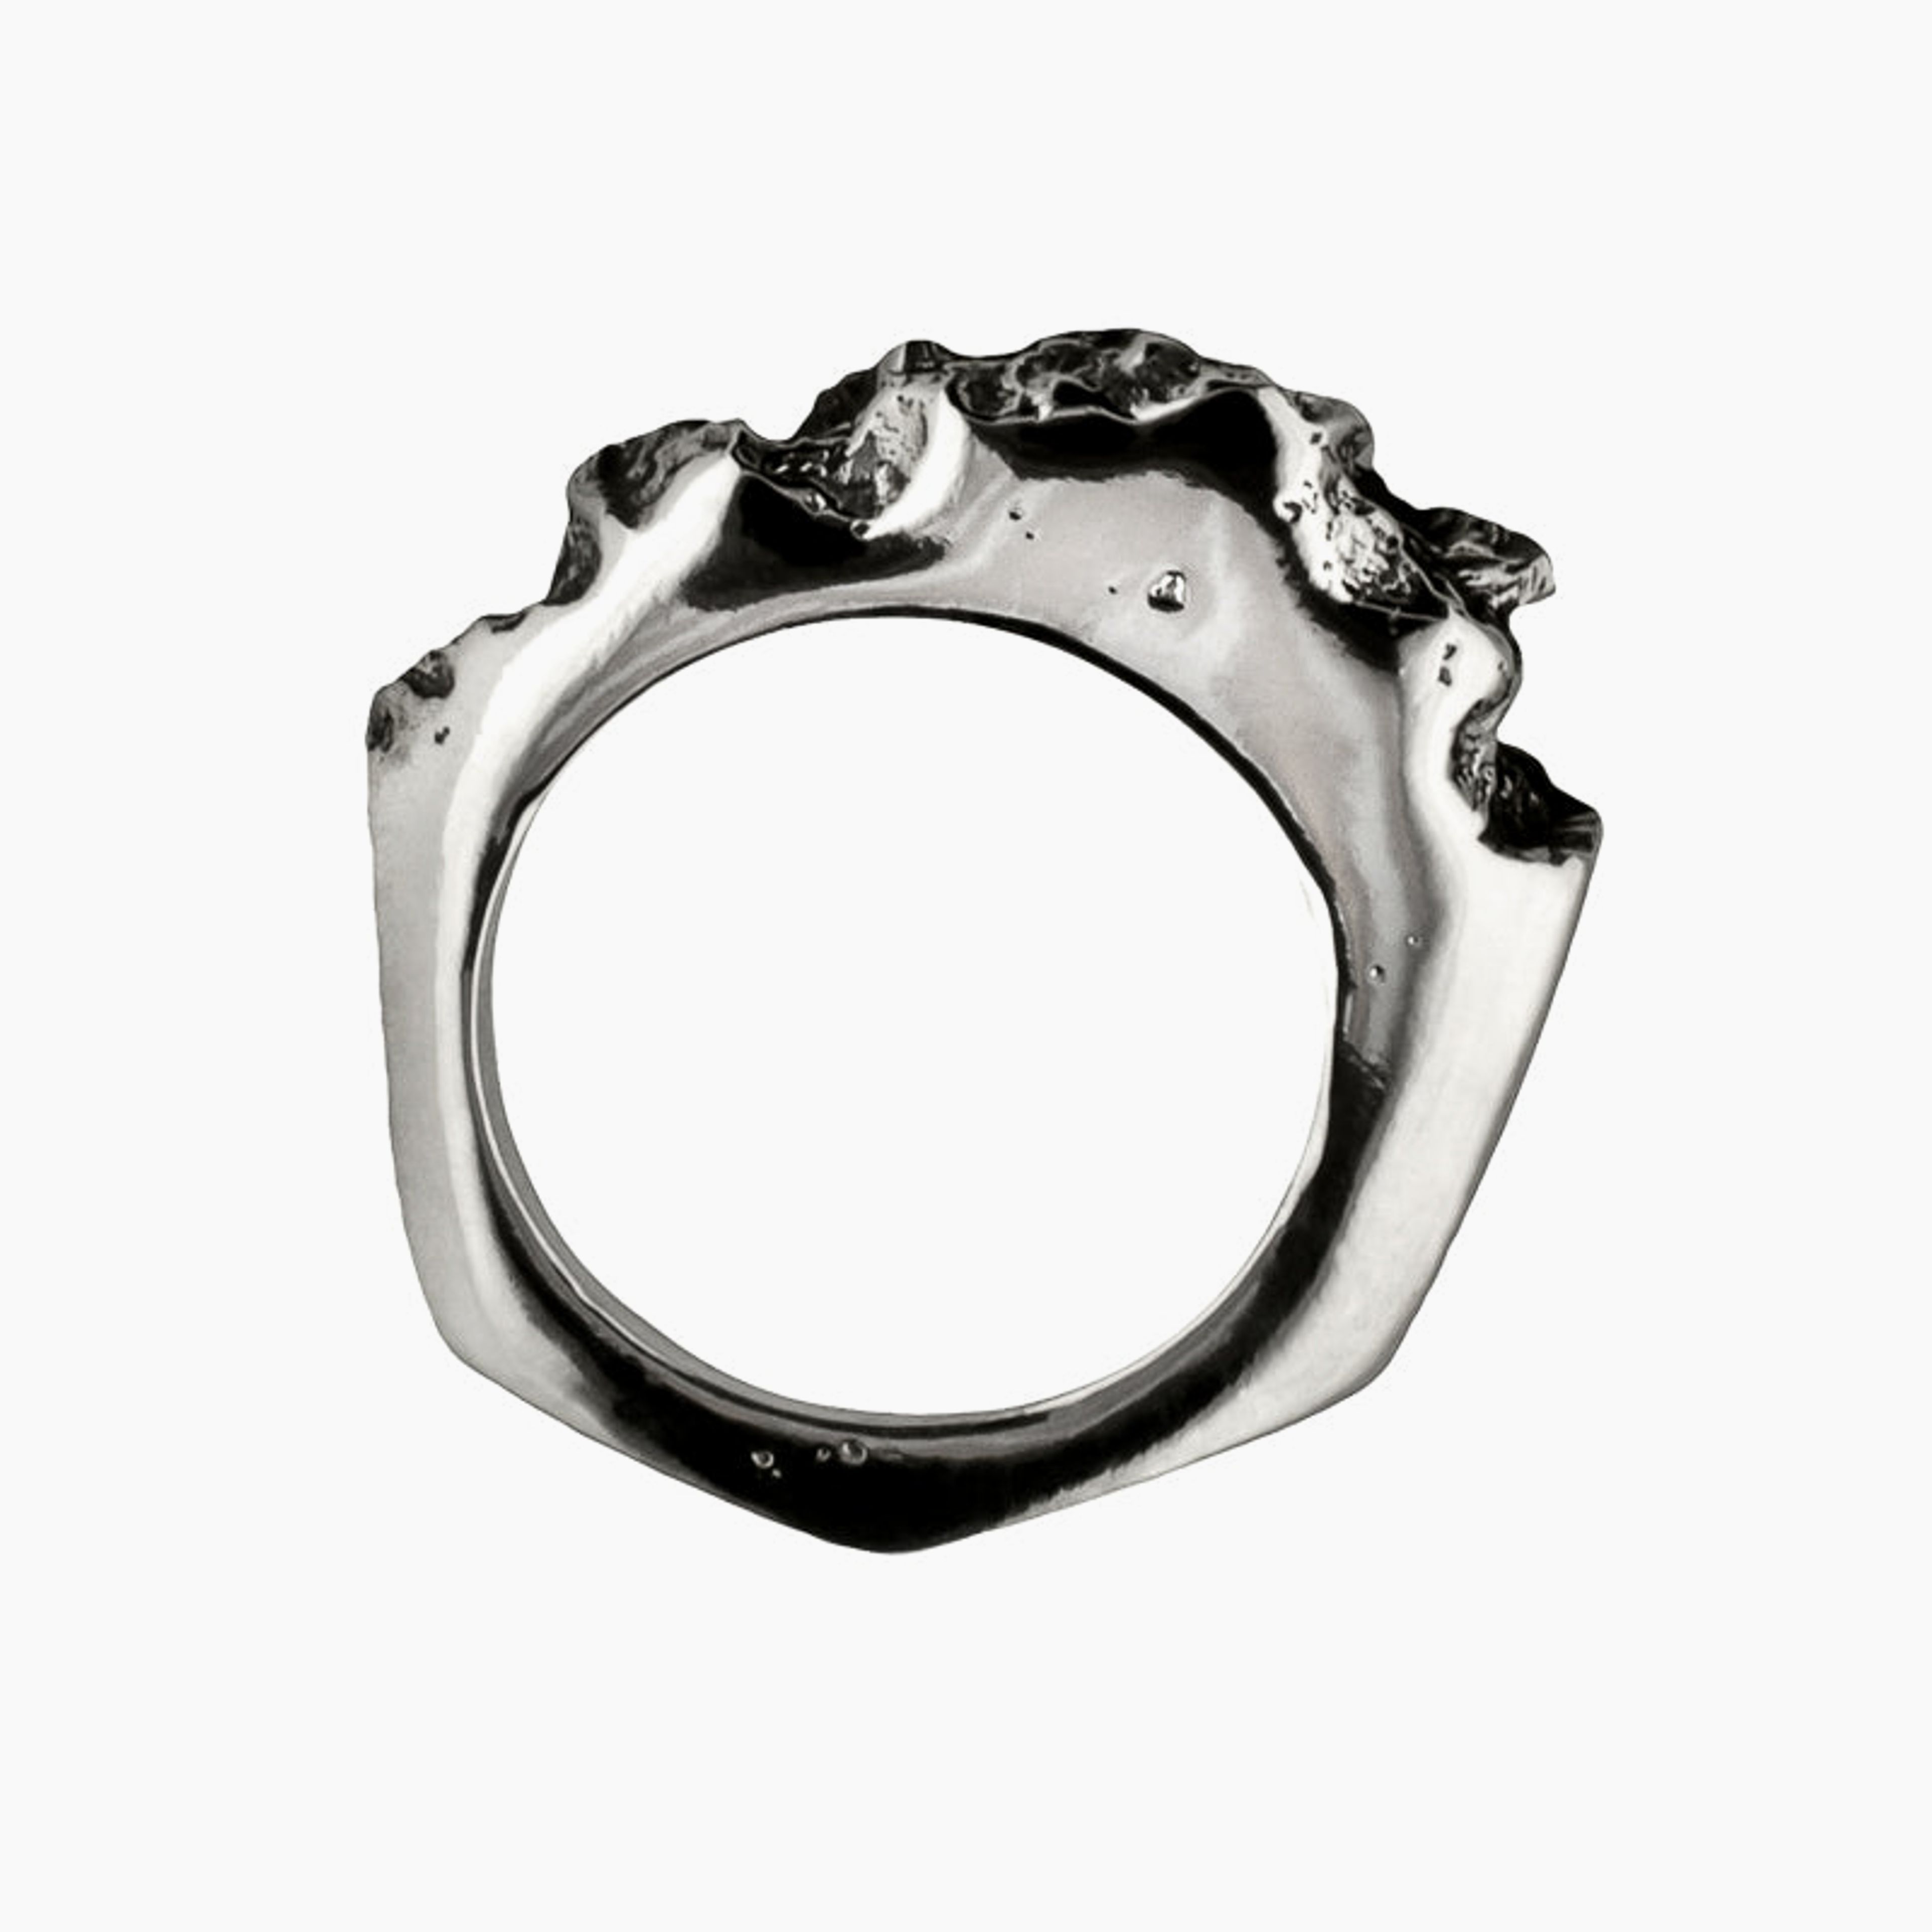 Silver Full Bitey Ring